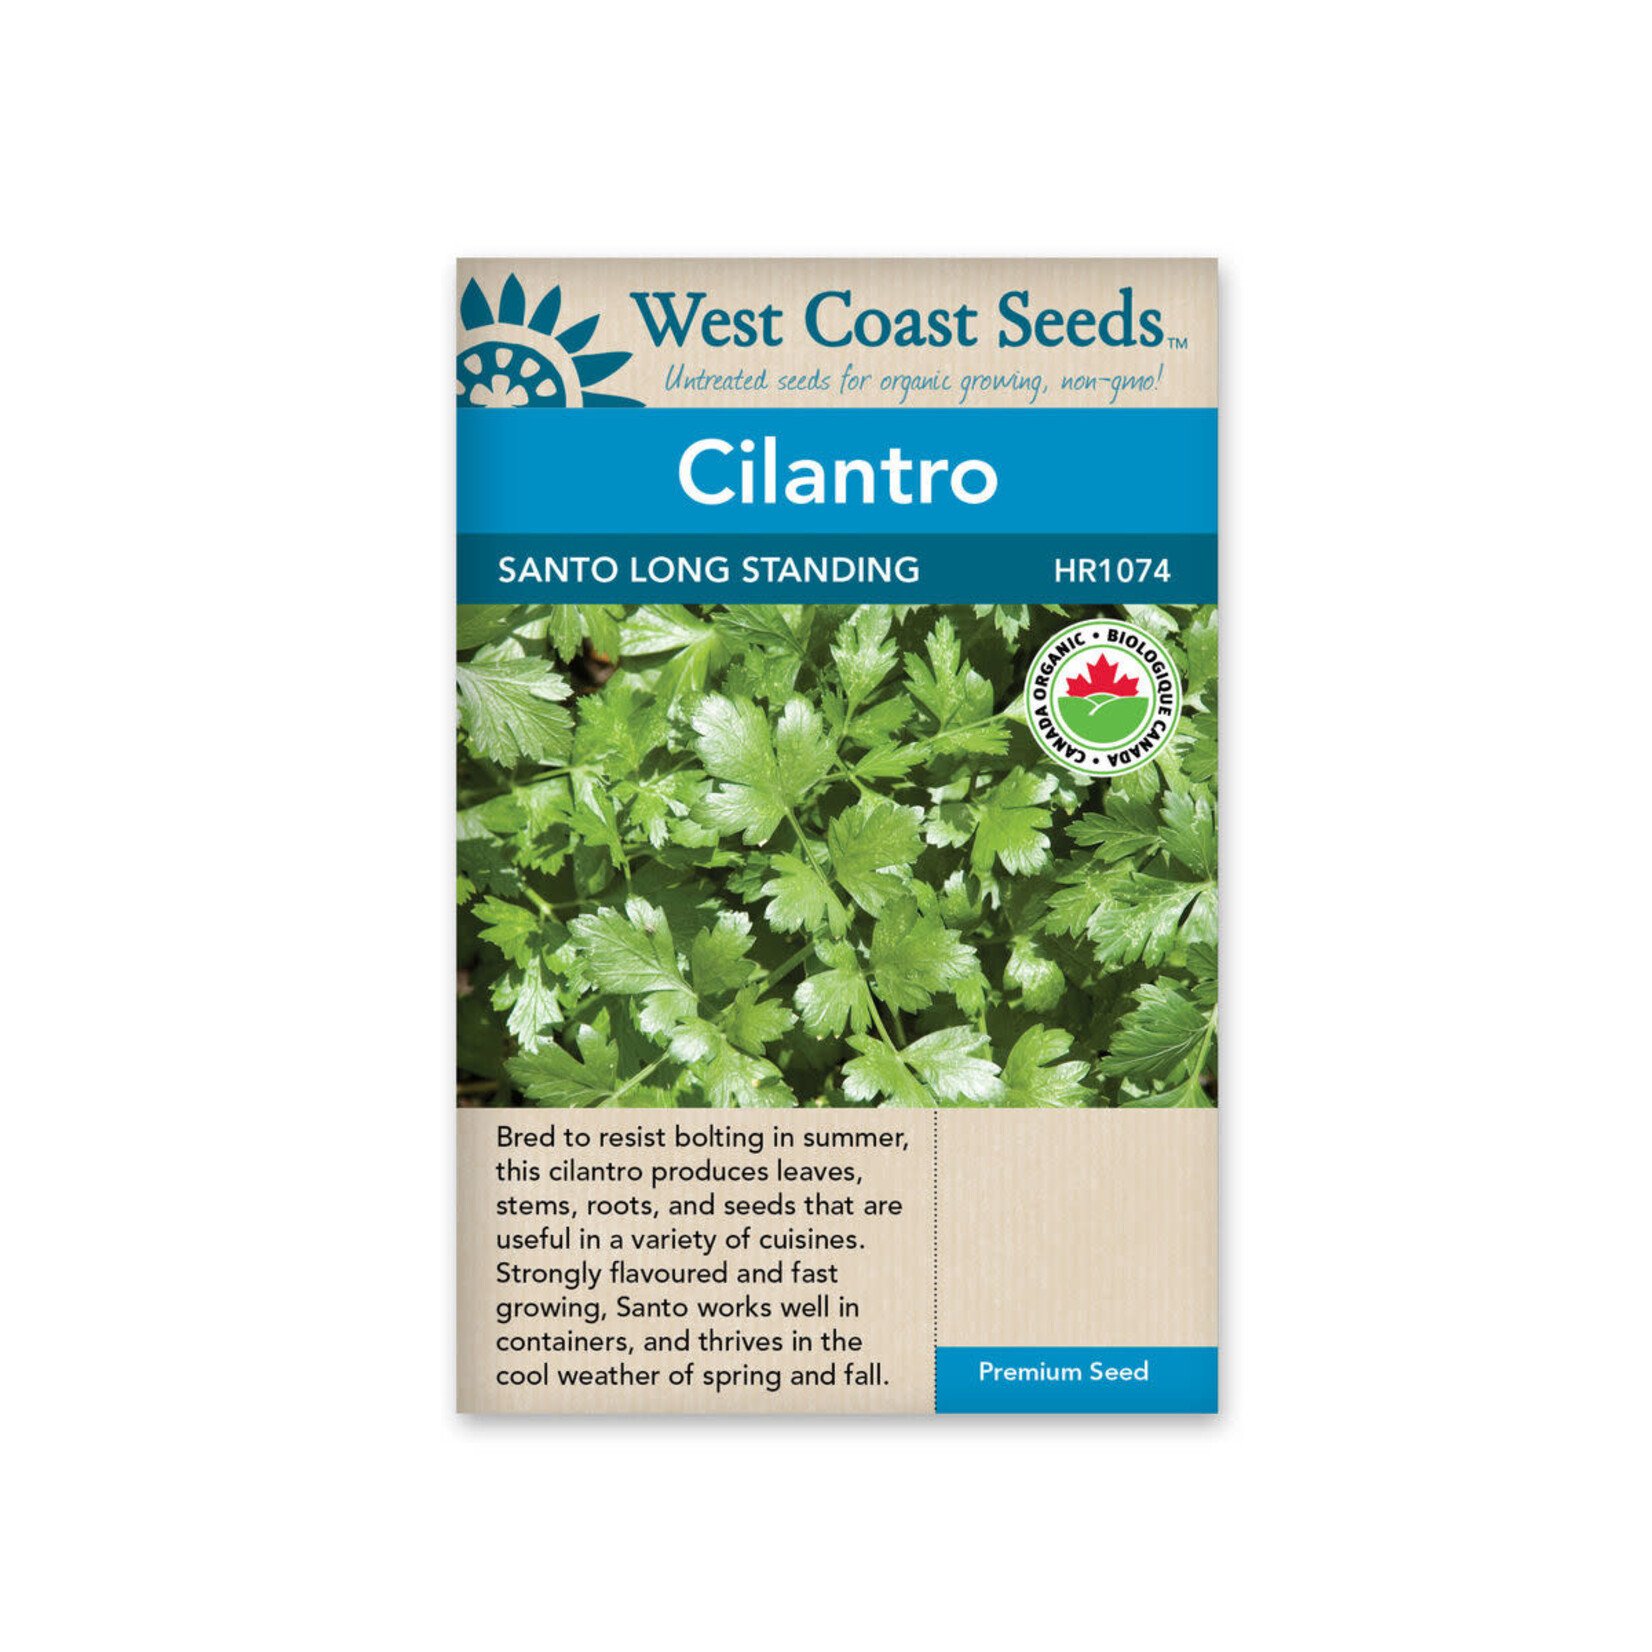 West Coast Seeds Cilantro-Santo Certified Organic